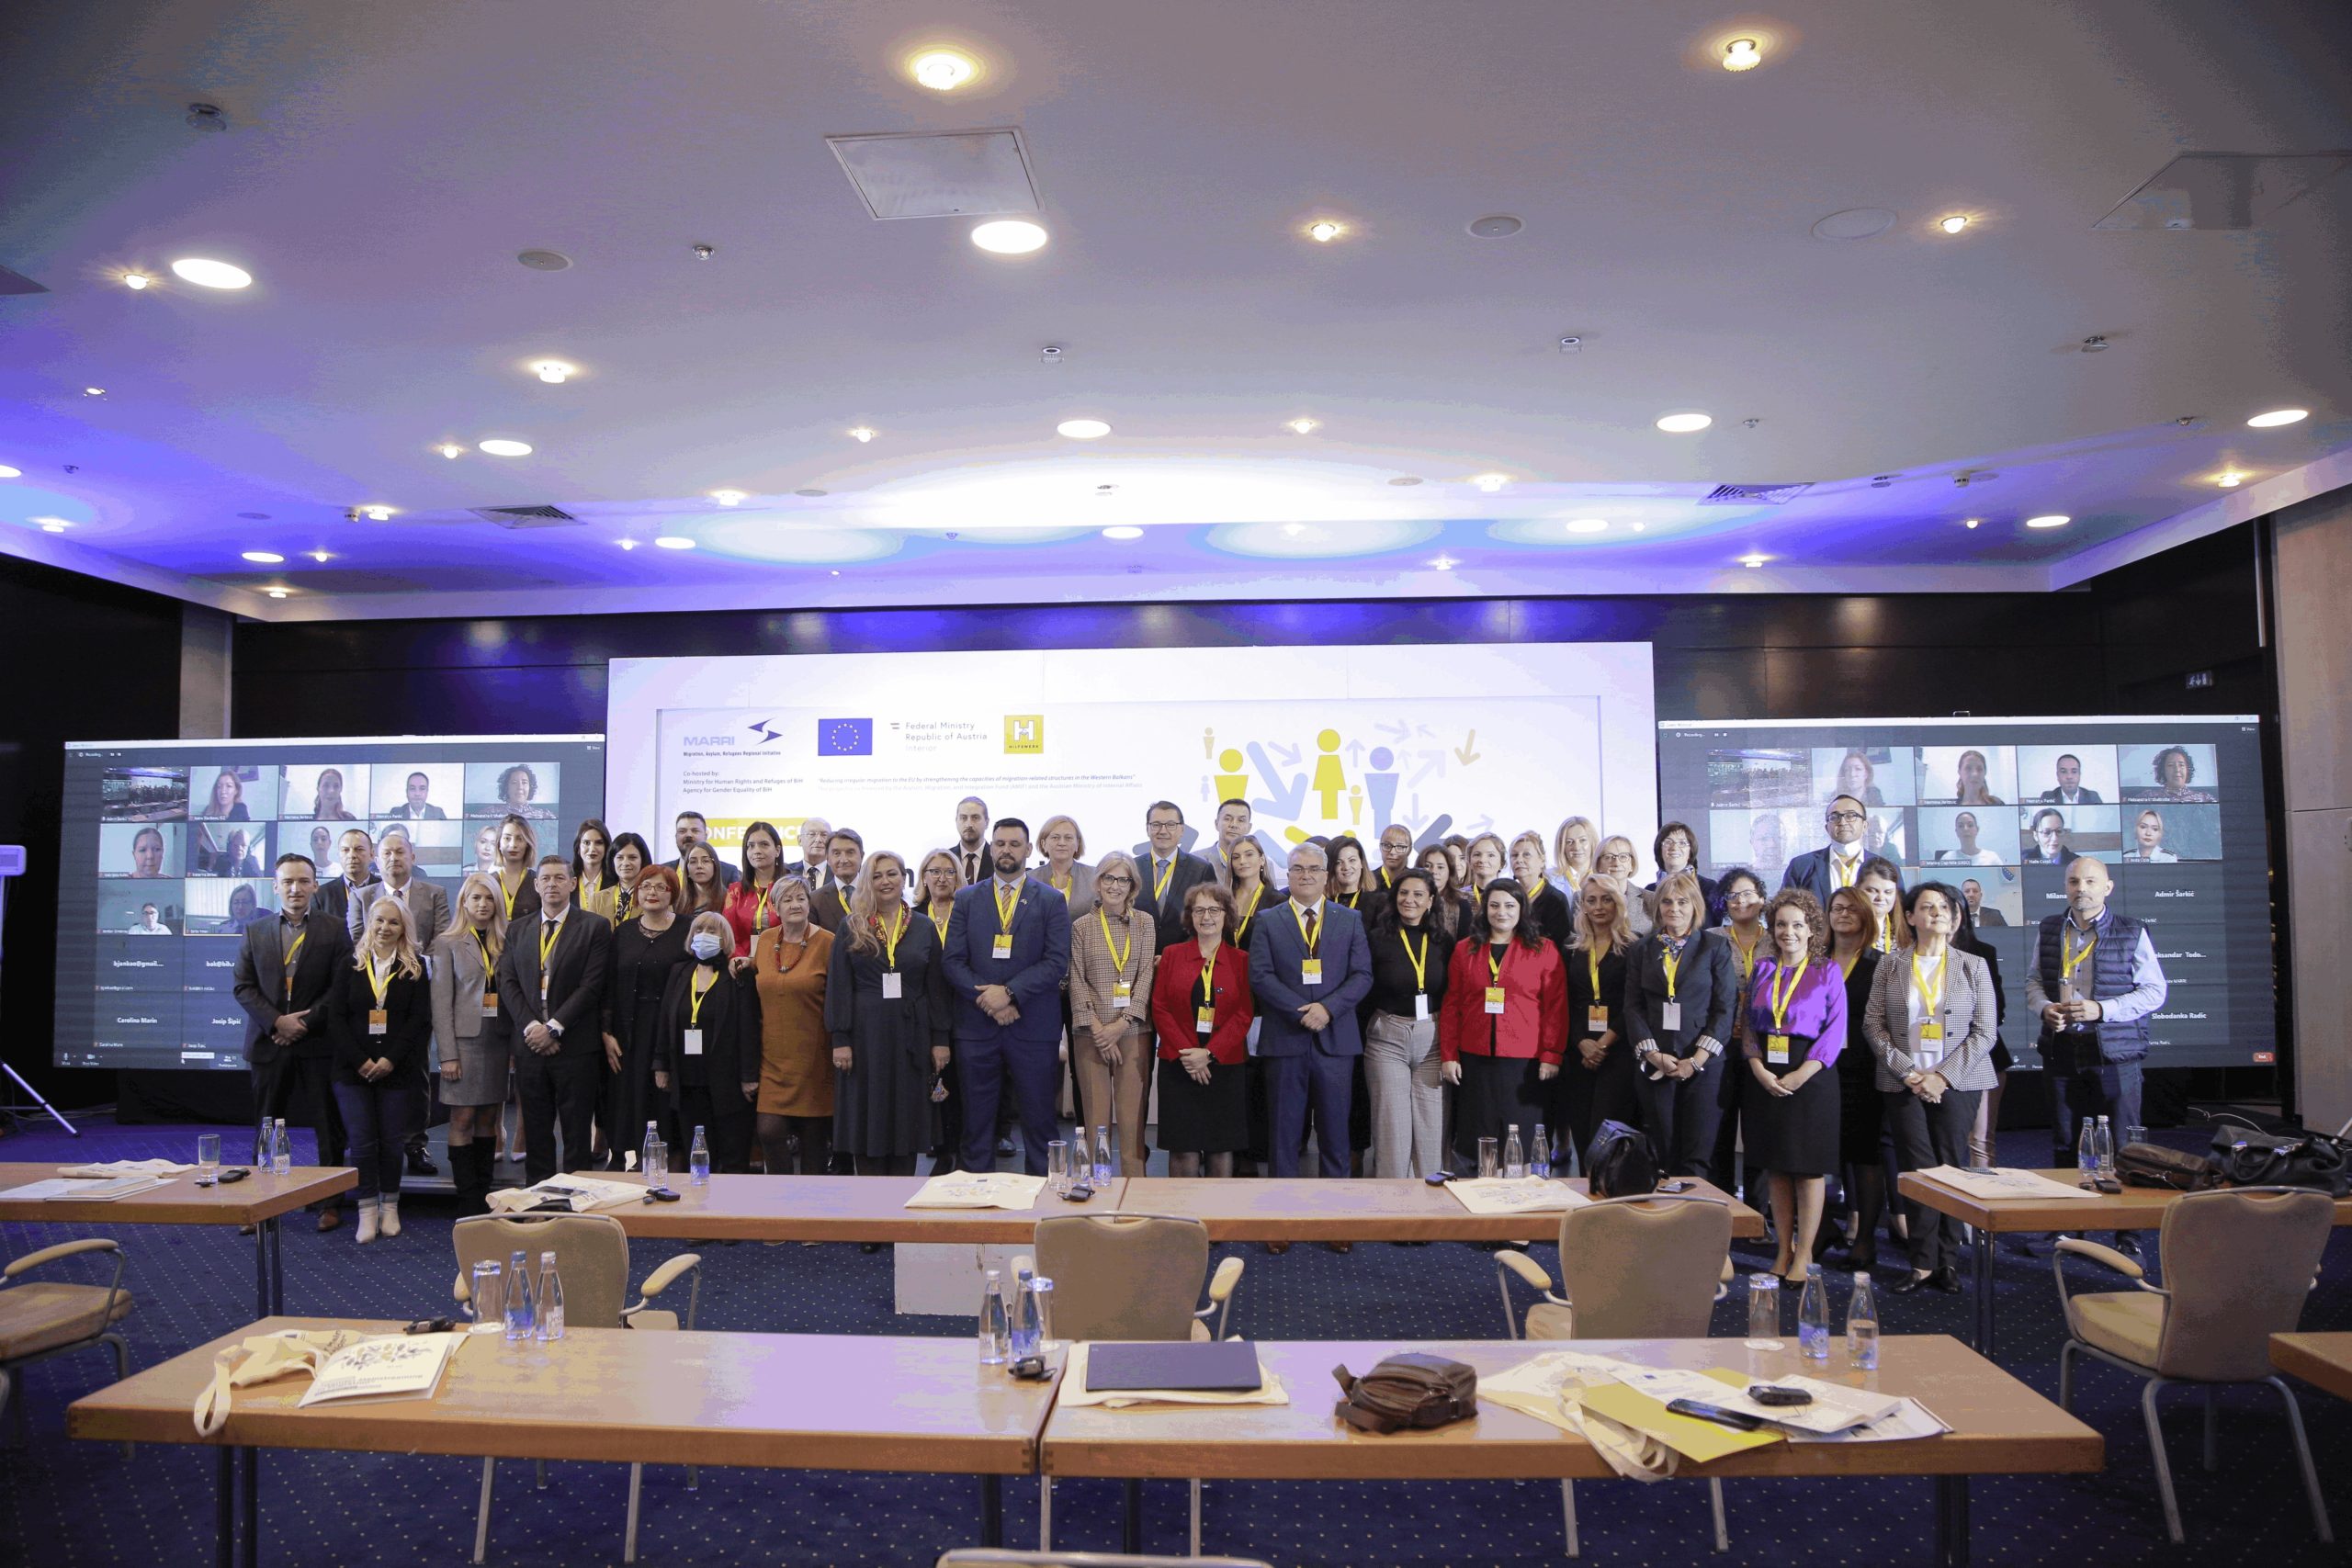 13-15 0ctober 2021 – Regional Conference on Gender Mainstreaming in Migration